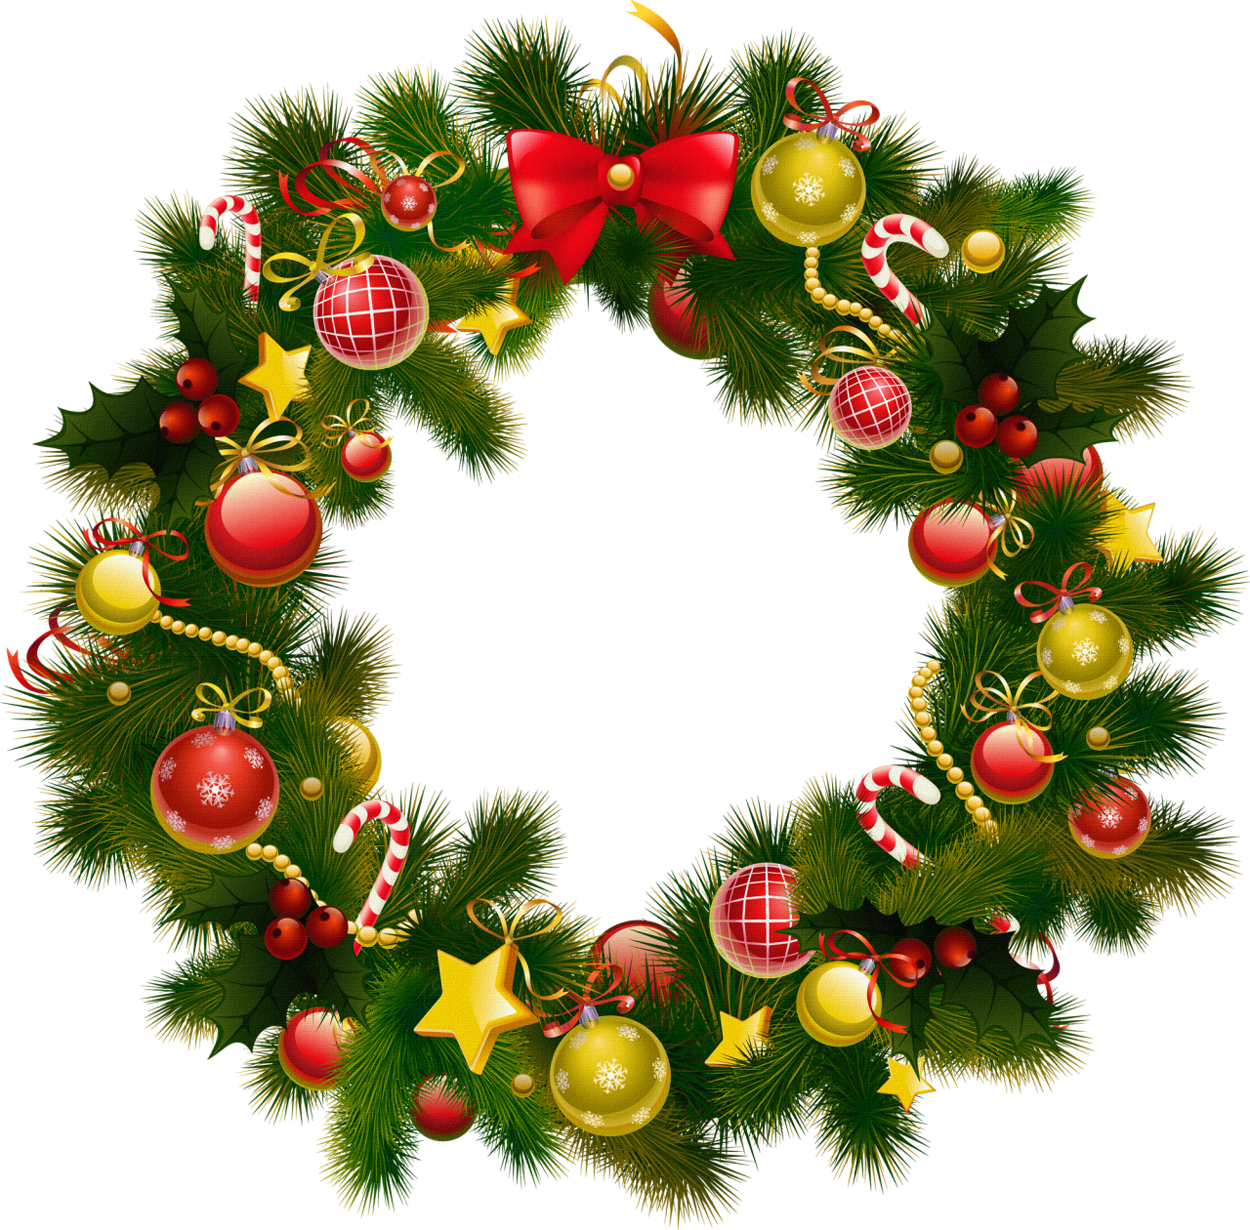 Festive Christmas Wreath Decoration.png